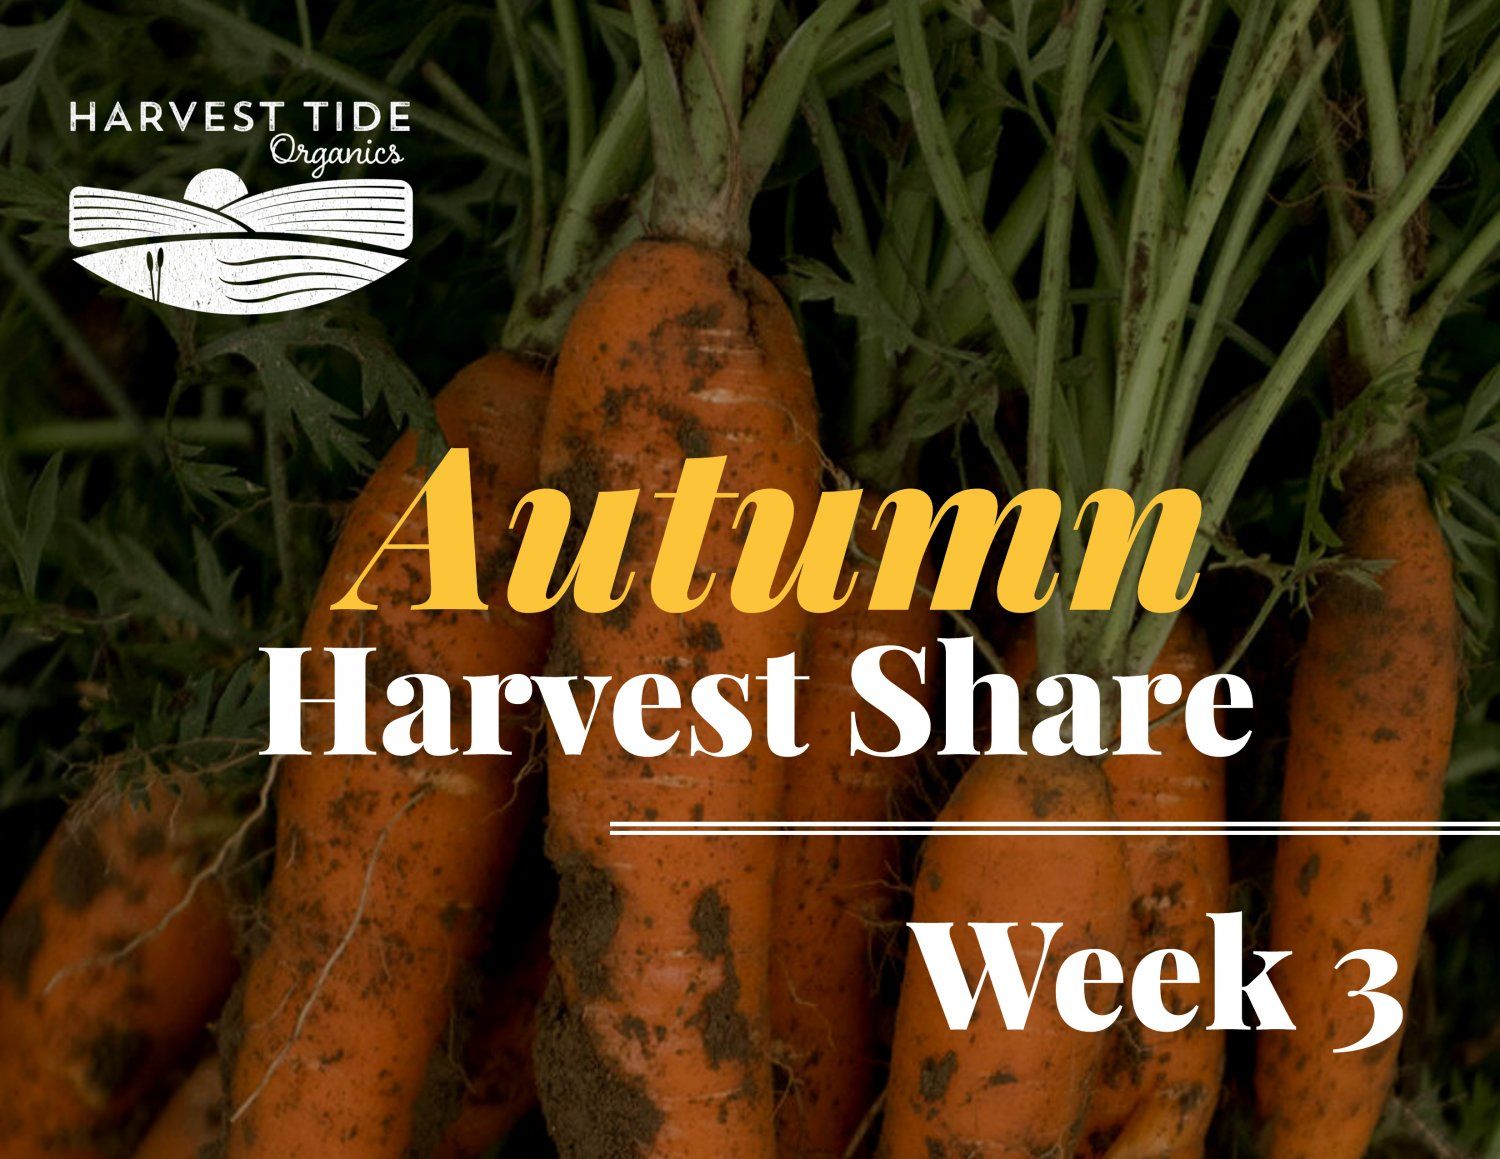 Autumn Harvest Share - Week 3